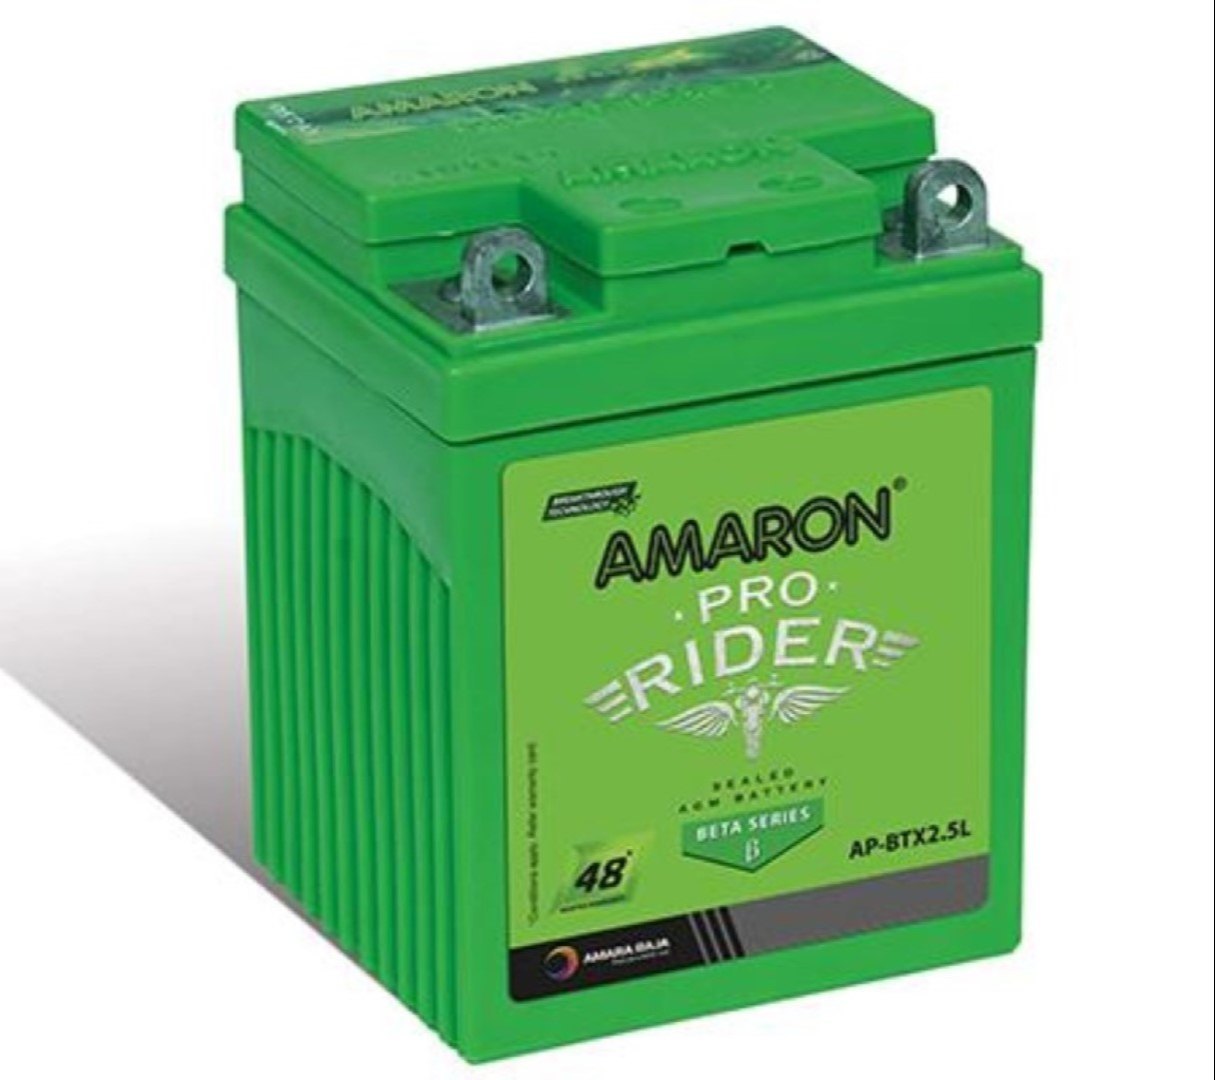 Amaron-PR-12APBTX25 – 2.5AH Bike Battery– 48 Months Warranty